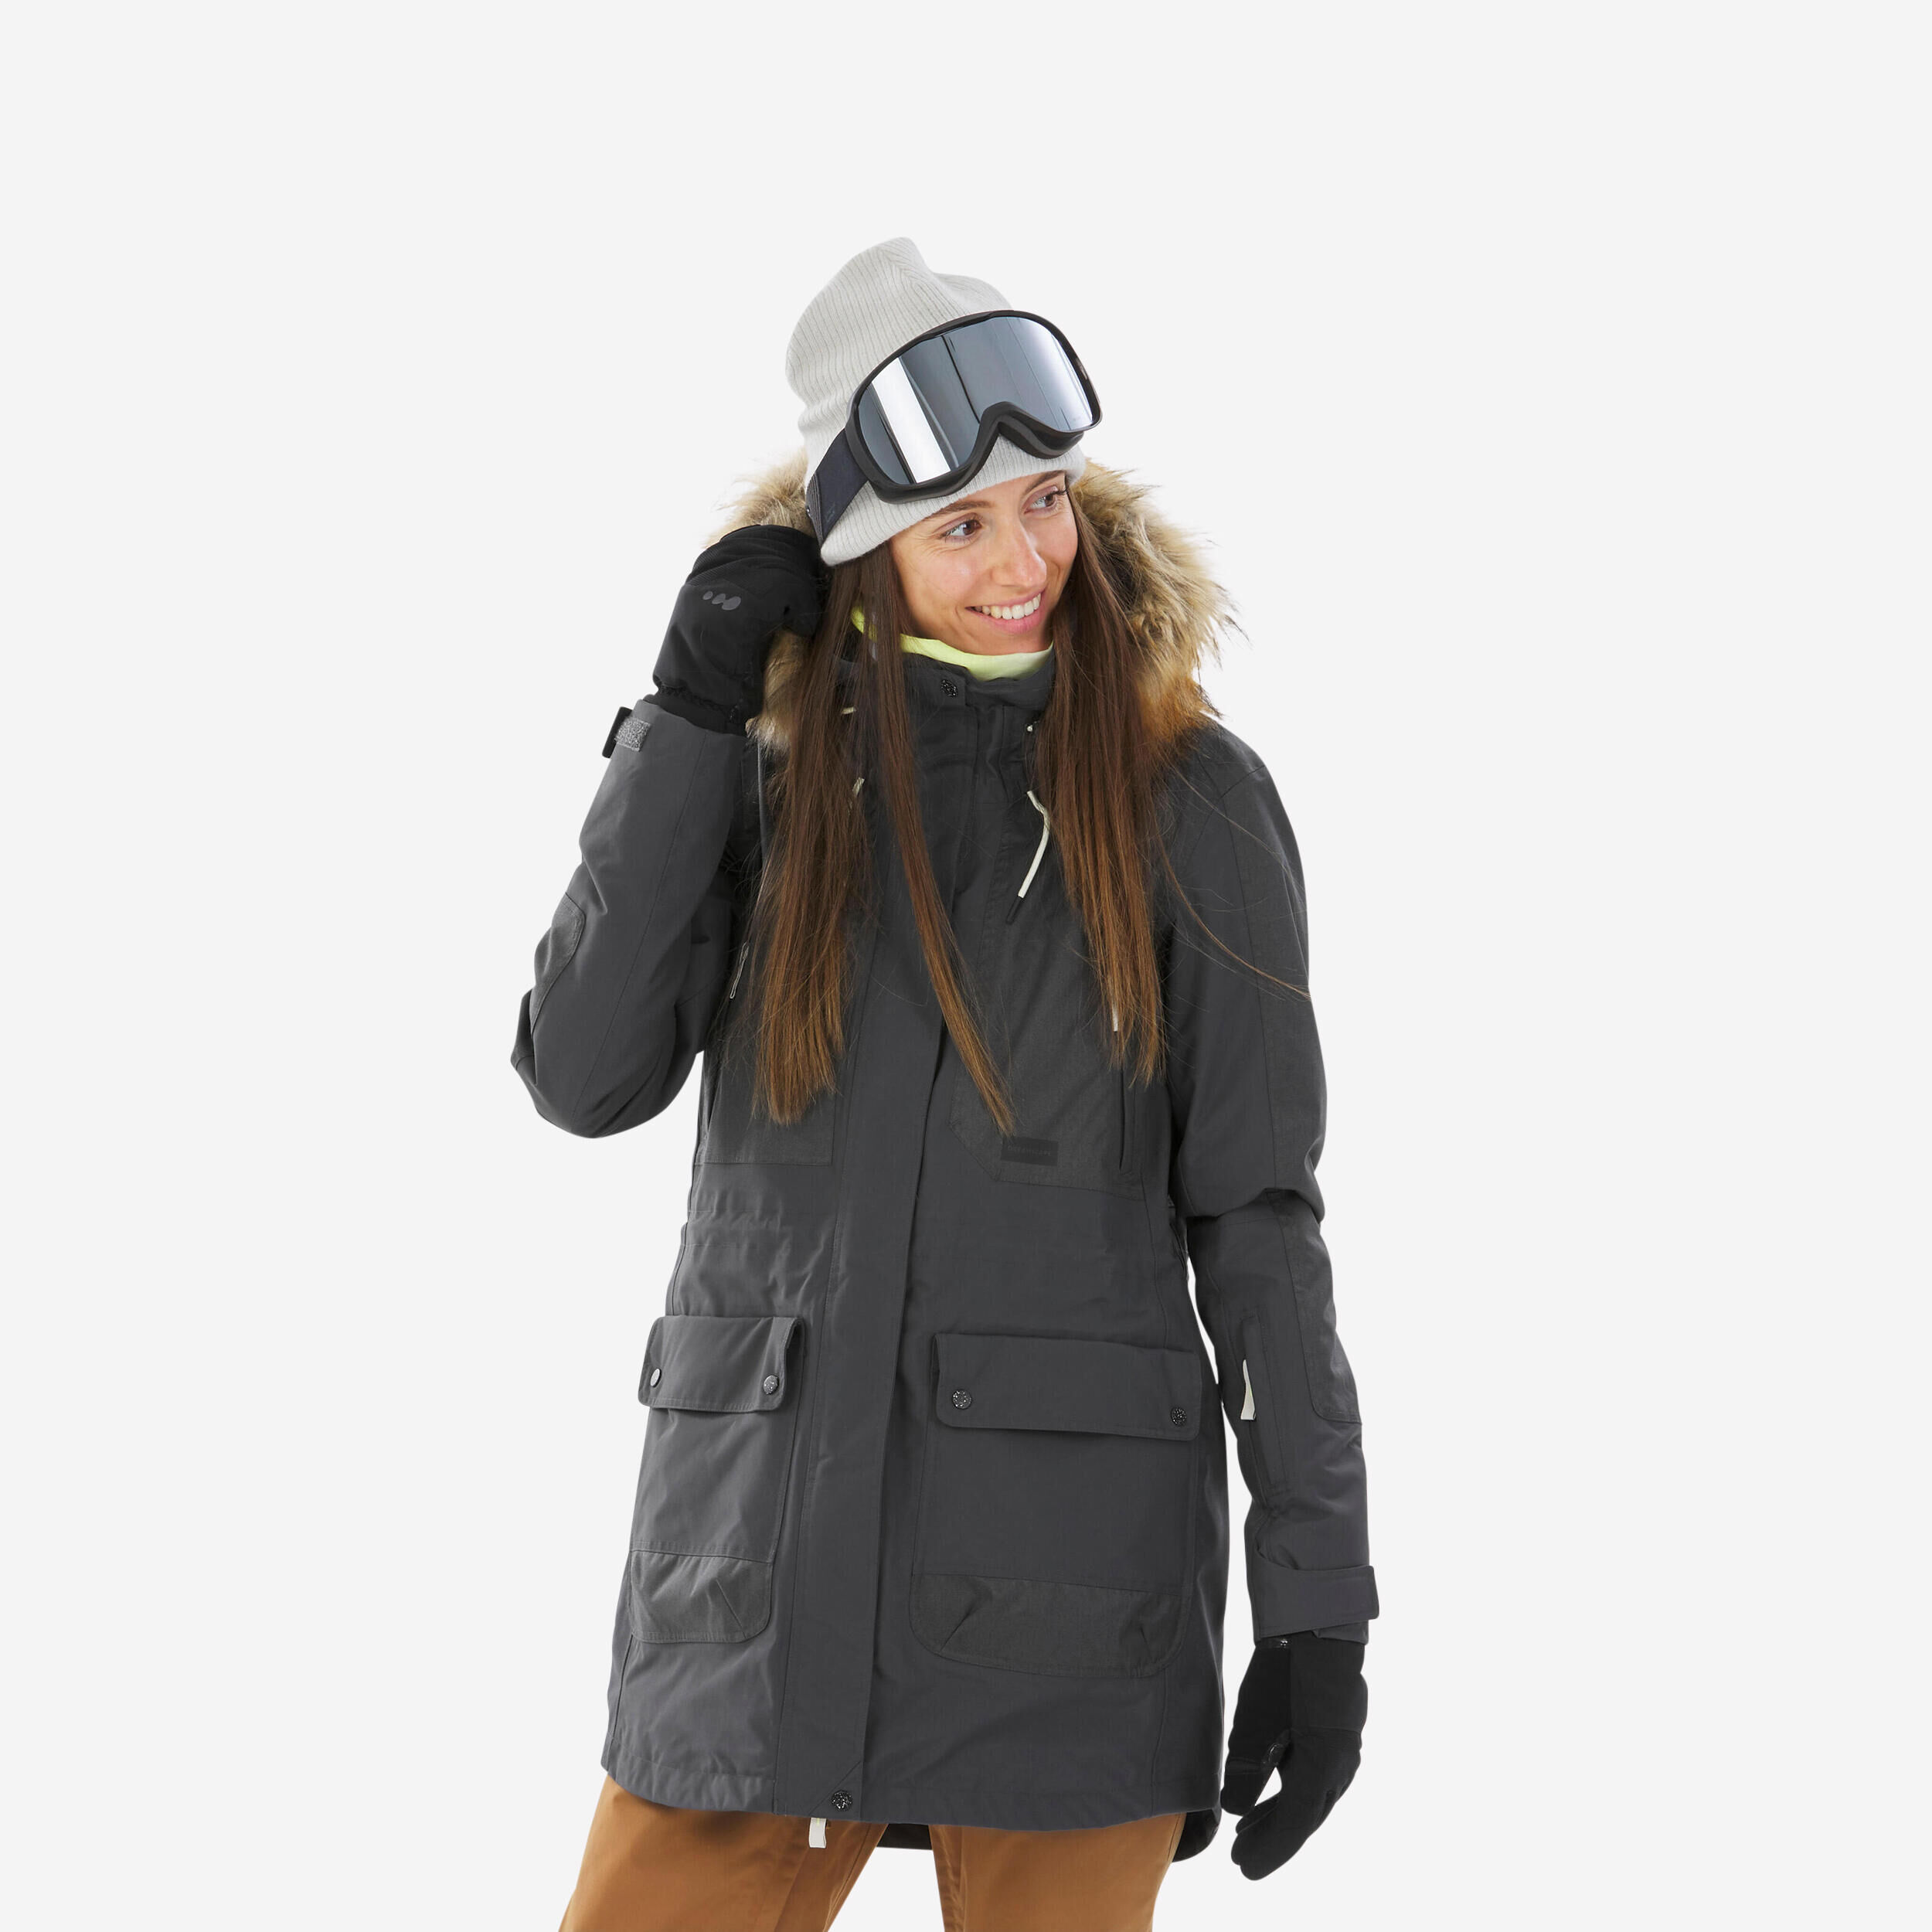 DREAMSCAPE Women’s Snowboard Jacket ZIPROTEC compatible - SNB 500  - grey